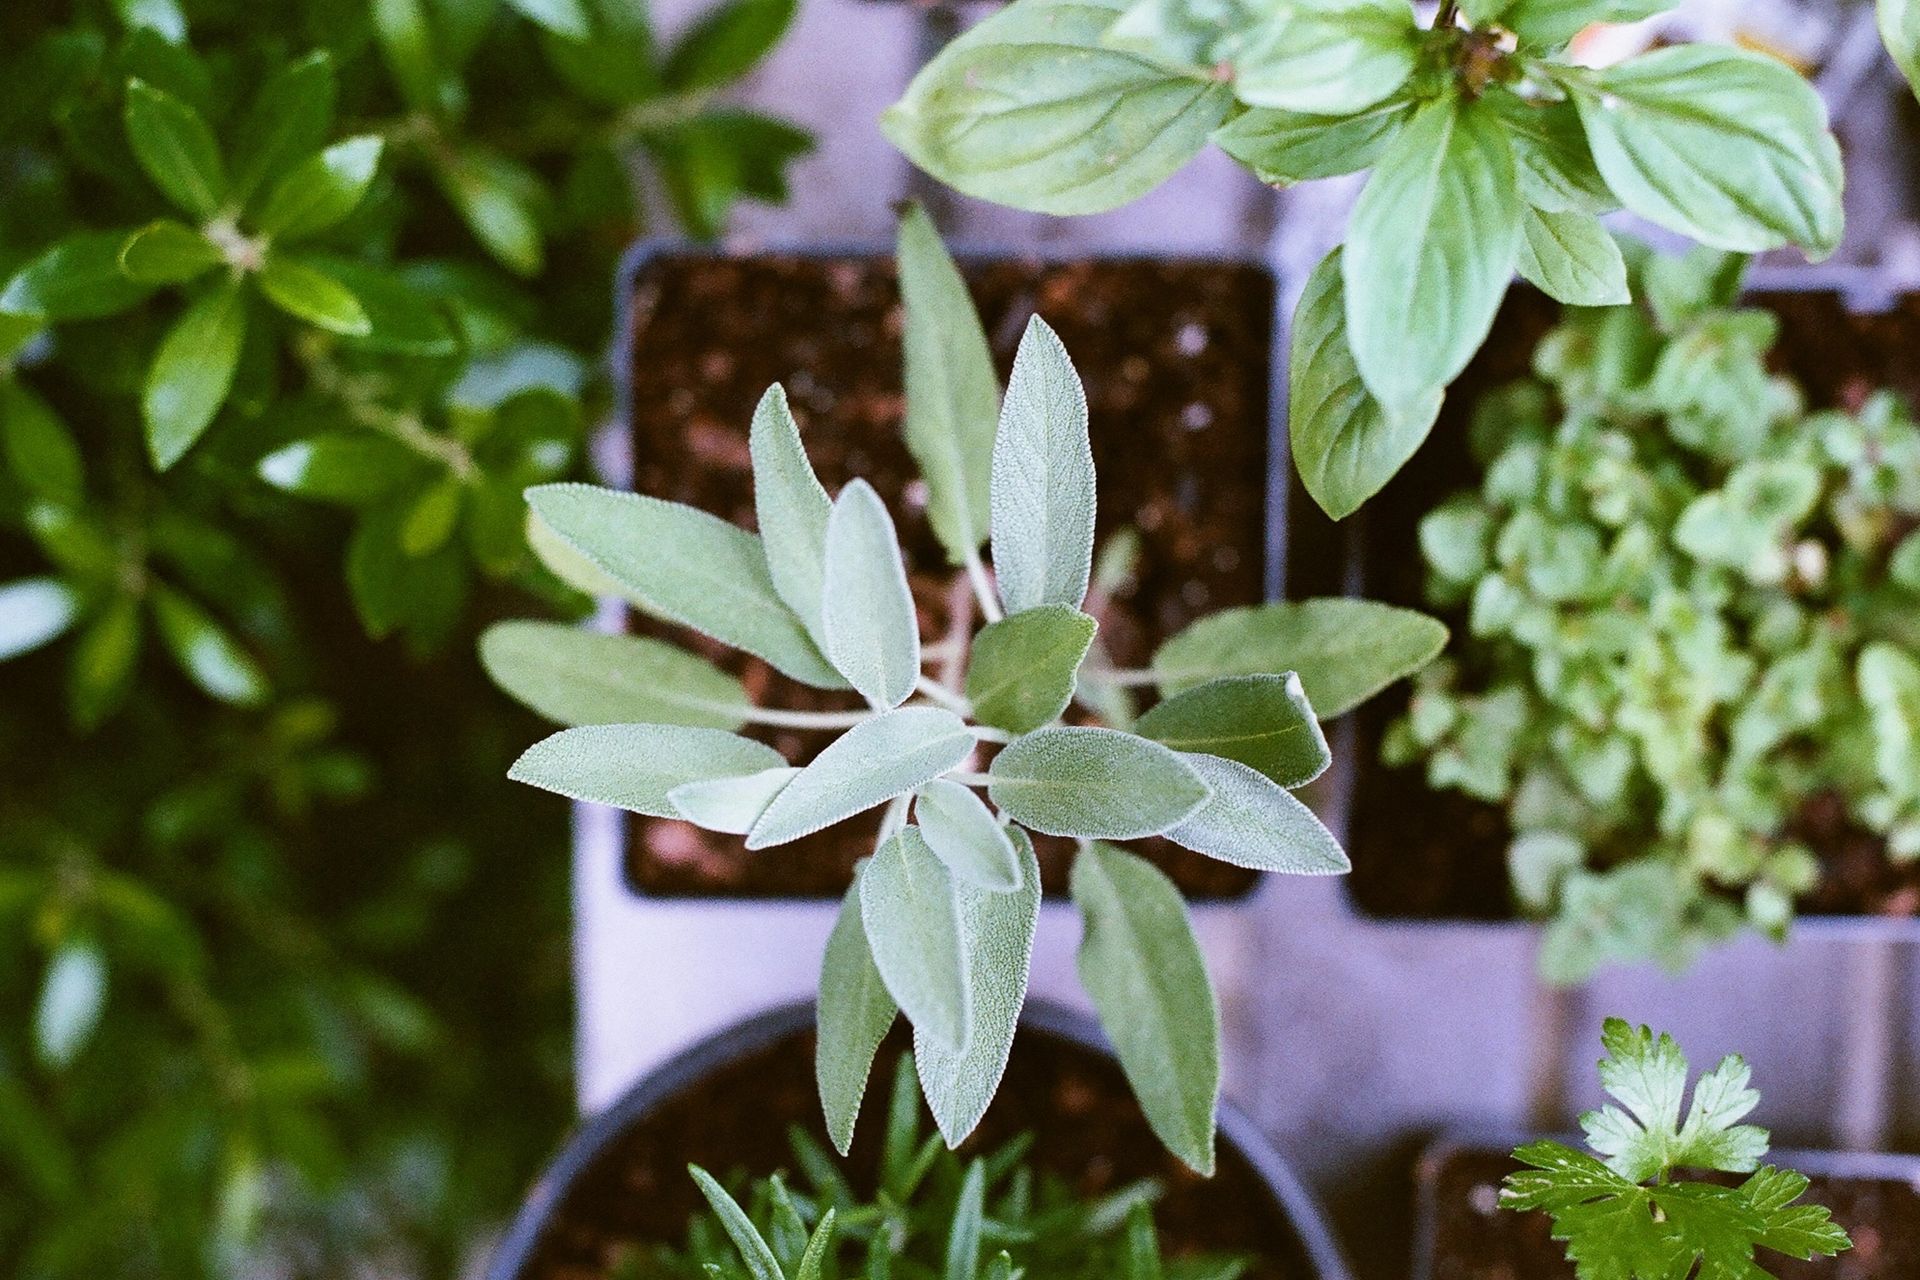 grow your own herb garden